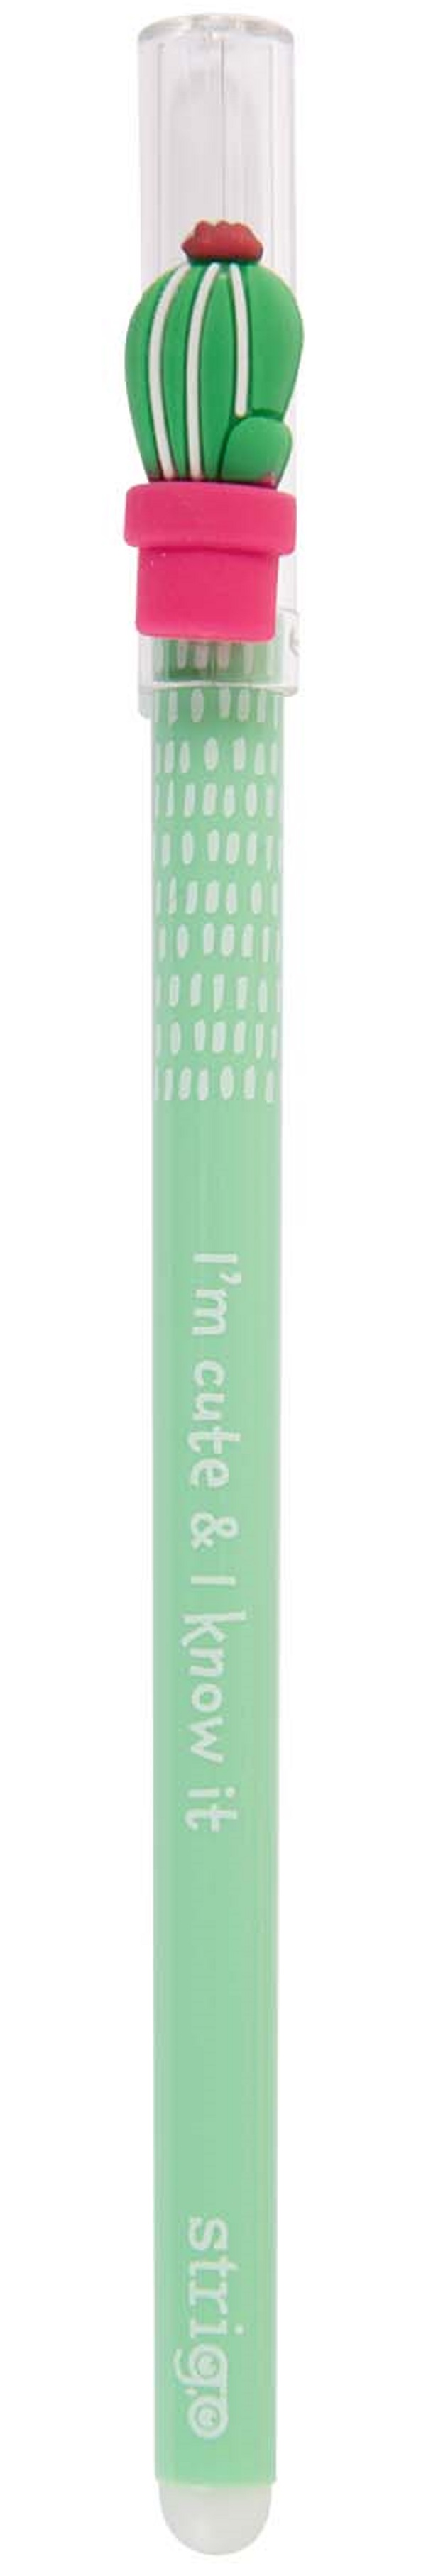 Pix cerneala termosensibila: Cactus verde